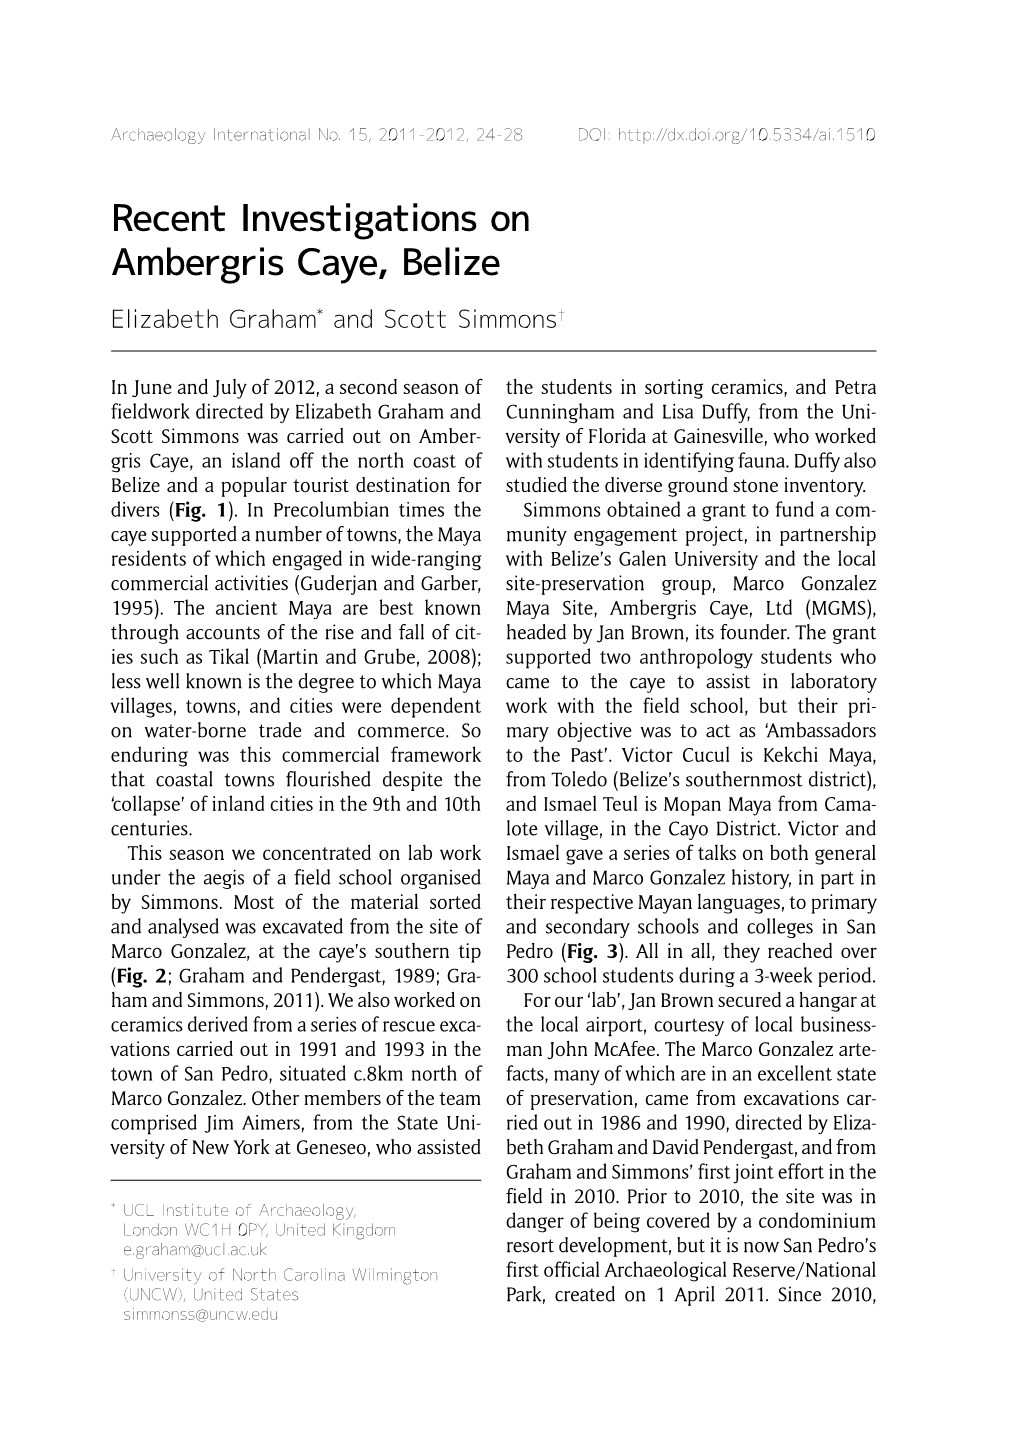 Recent Investigations on Ambergris Caye, Belize Elizabeth Graham* and Scott Simmons†